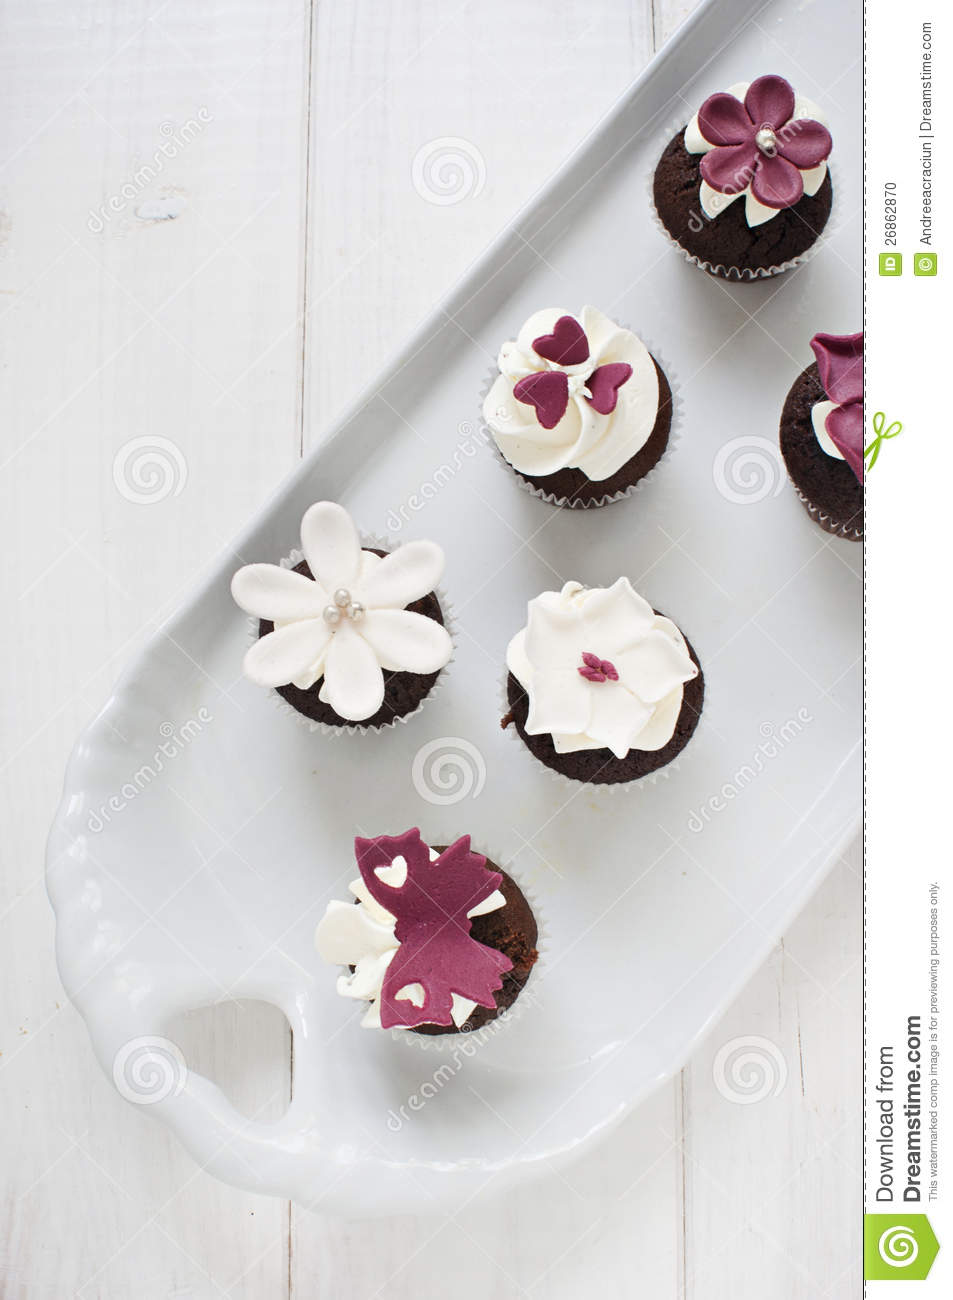 Wedding Cupcakes with Fondant Flowers